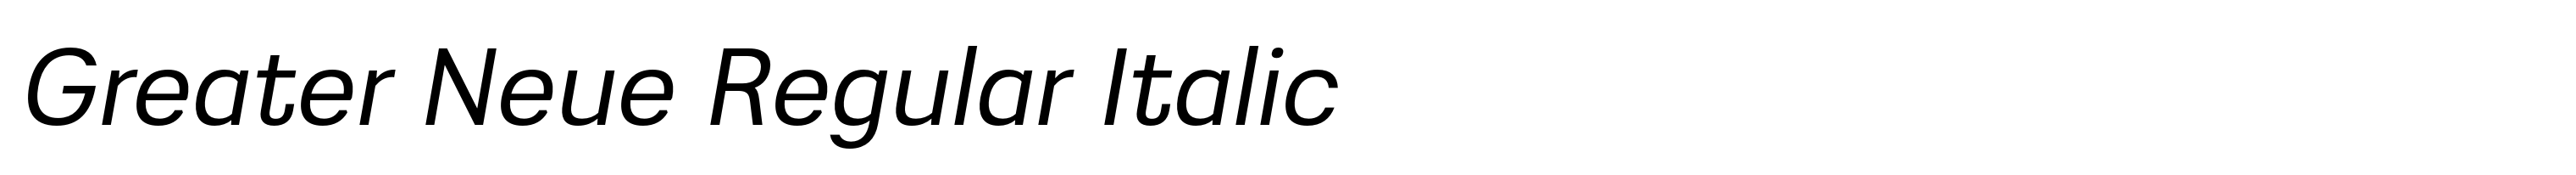 Greater Neue Regular Italic